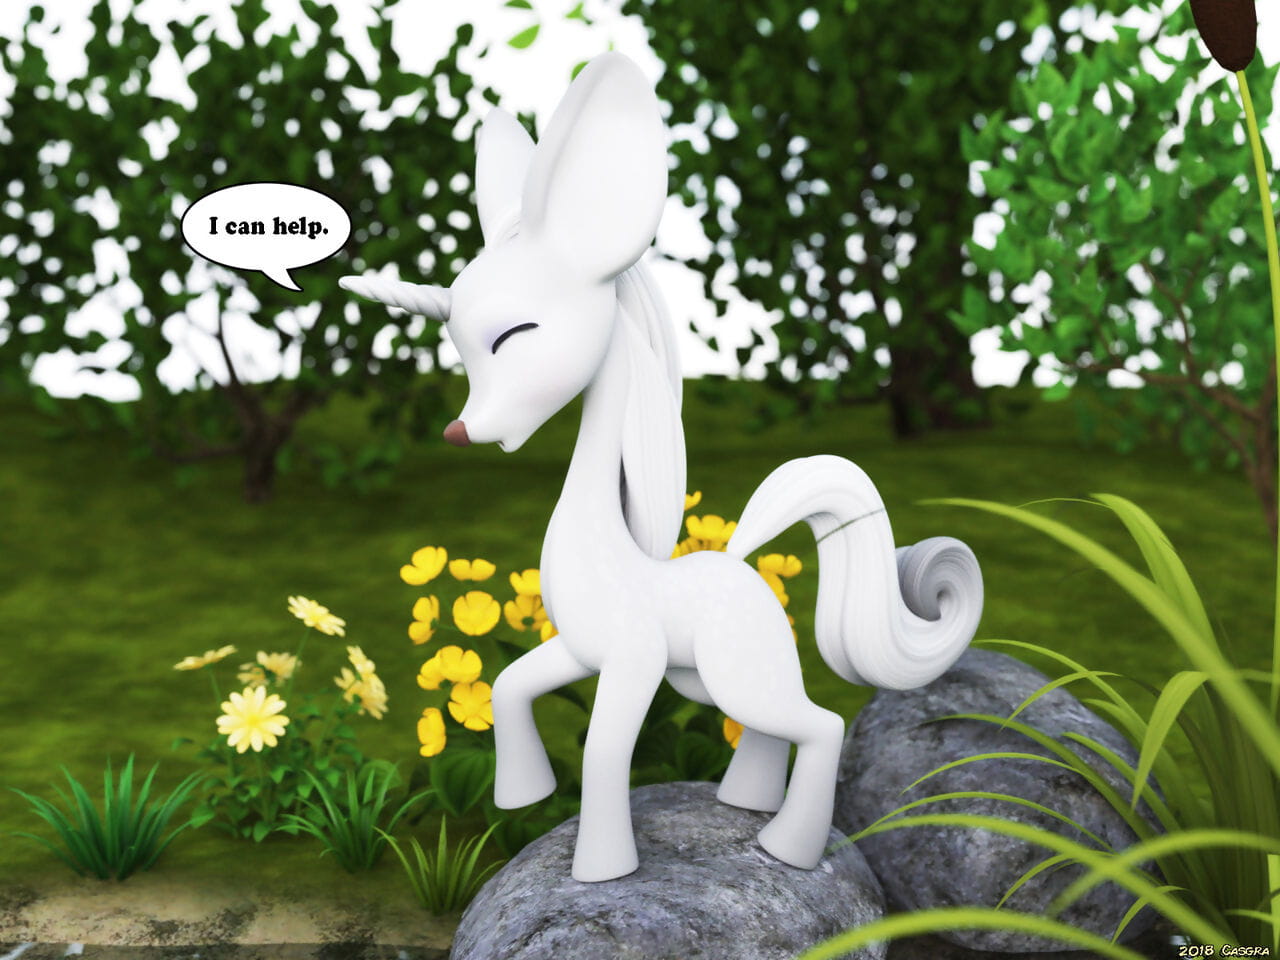 Casgra Otherworldly Chapter 1 The White Unicorn English - part 5 page 1